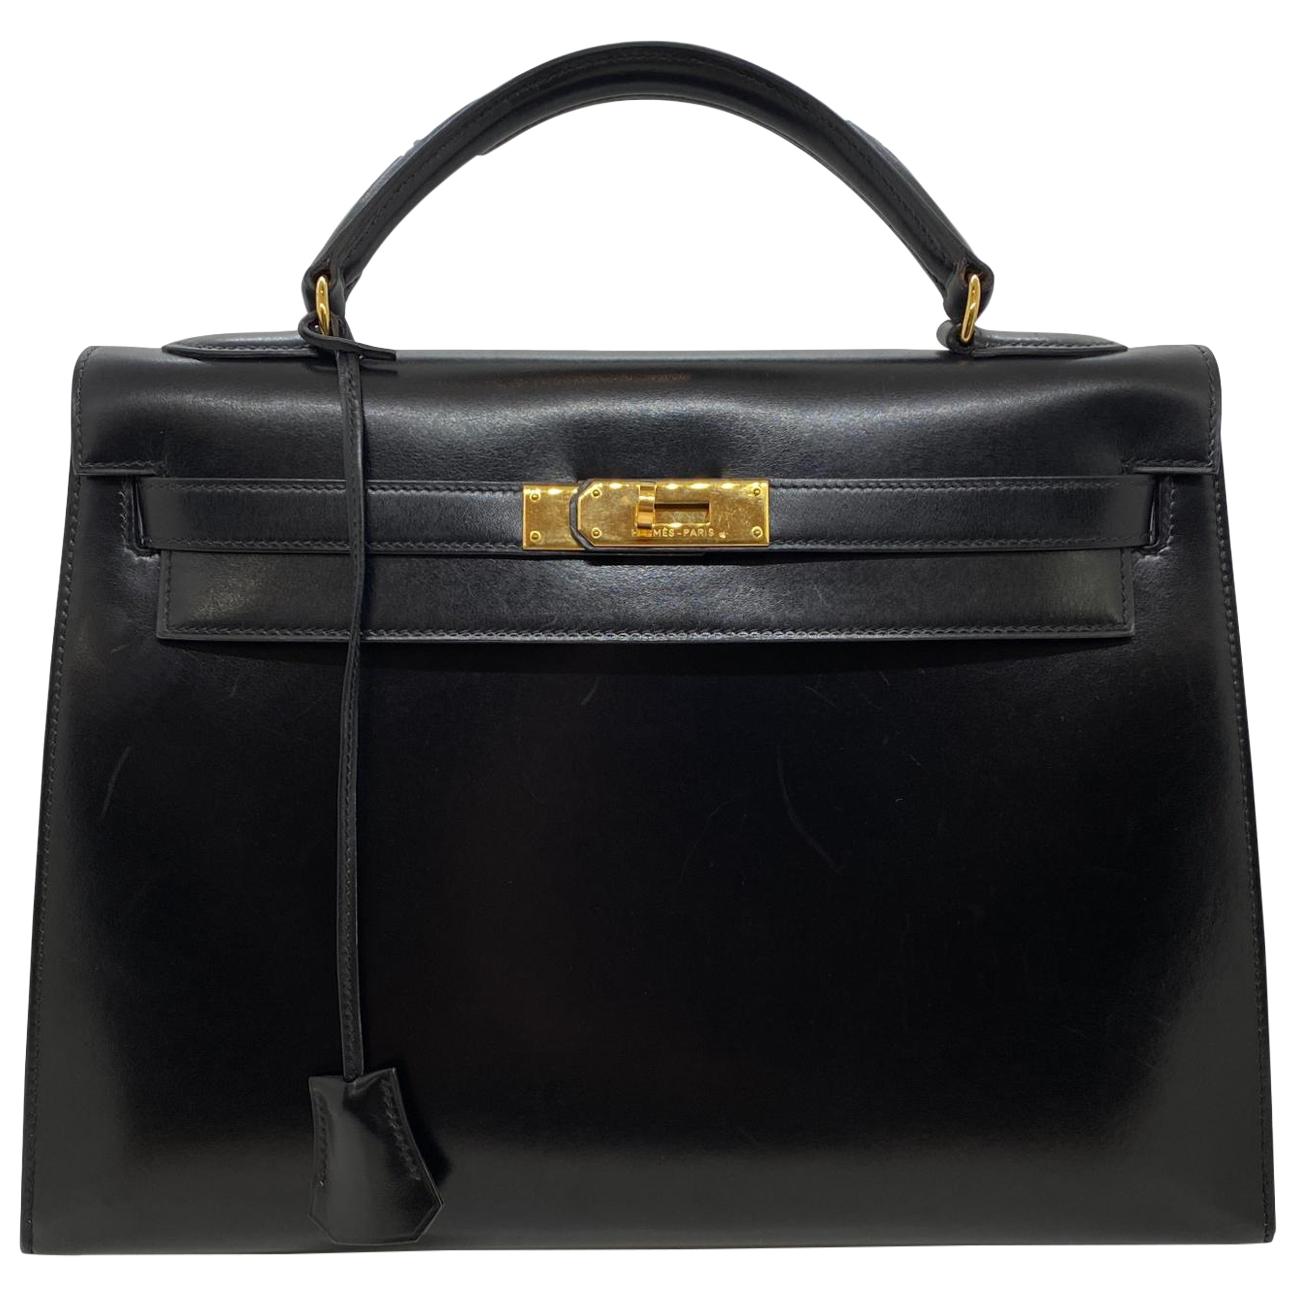 Hermes Vintage Kelly Handbag Noir Black Box Calf with Gold Hardware 32, 1991.